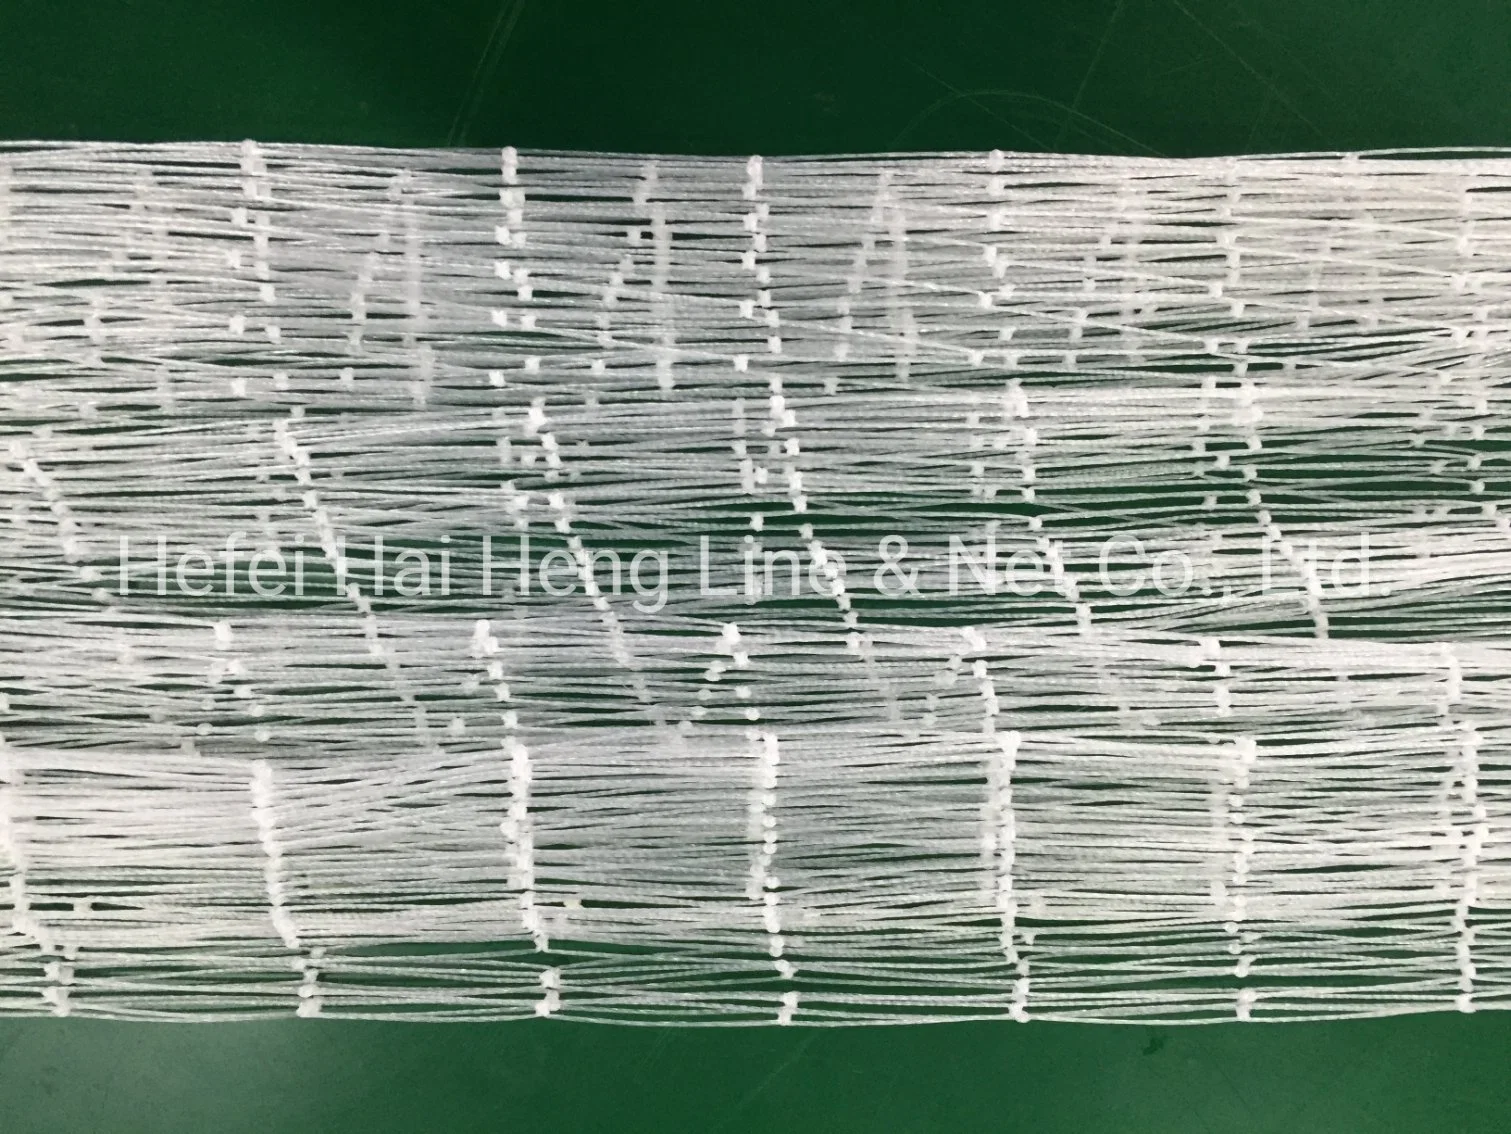 Redes de Pesca monofilamento de nylon 0.20mm X 6ply MD X 220 X 200 metros X 3-3/4"